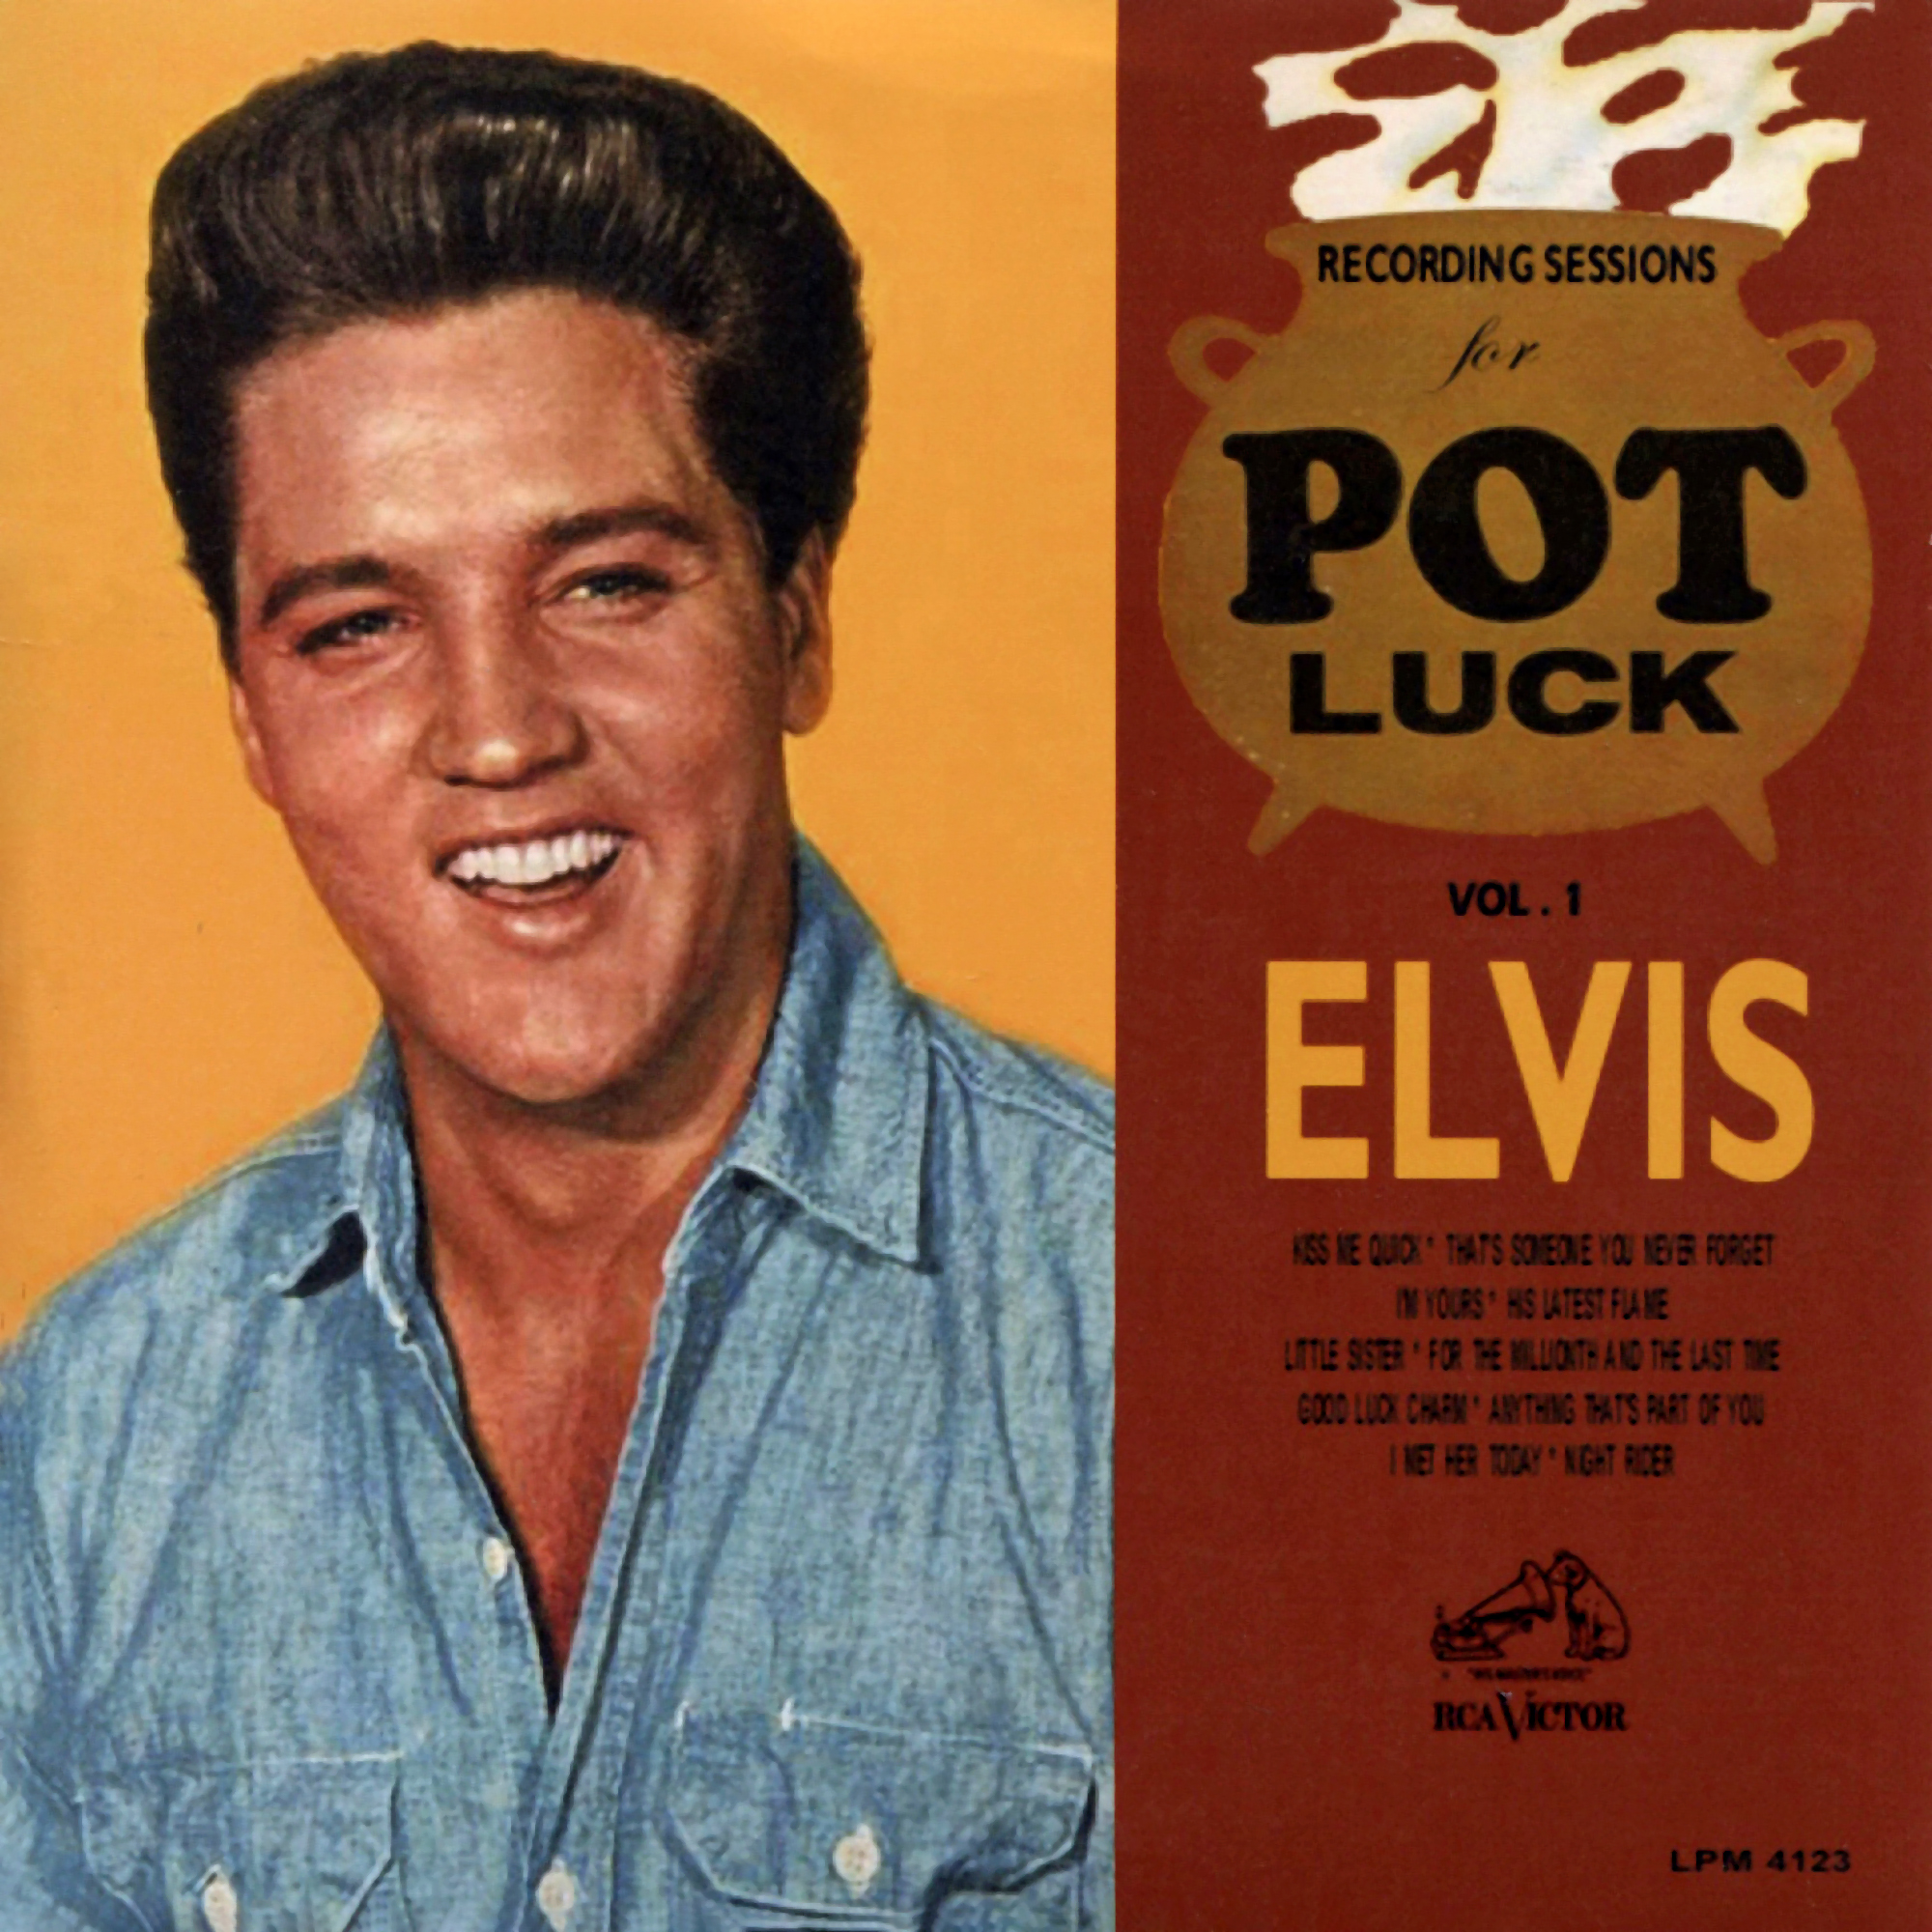 Elvis Presley - Recording Sessions For Pot Luck, Vol. 1 [CMT Star LPM4123]